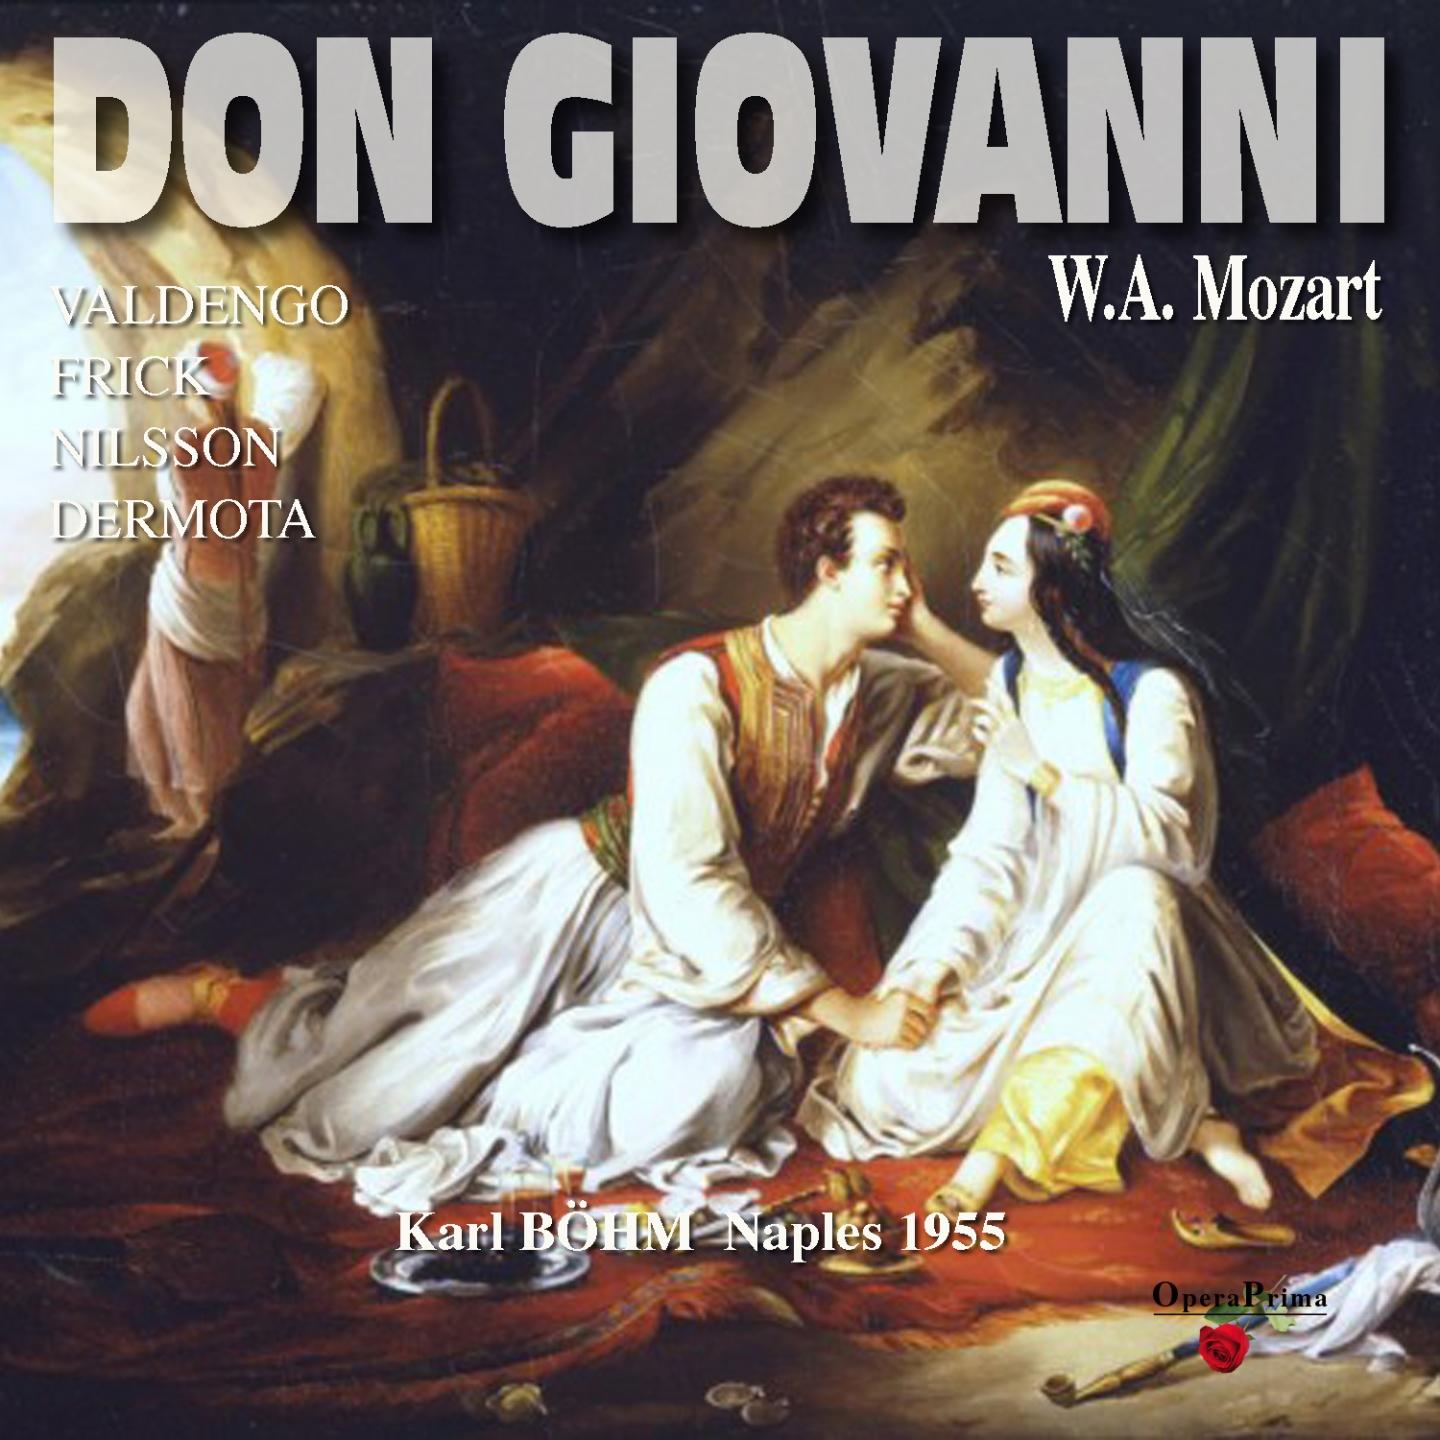 Don Giovanni: Act I - "Protegga il giusto Cielo"